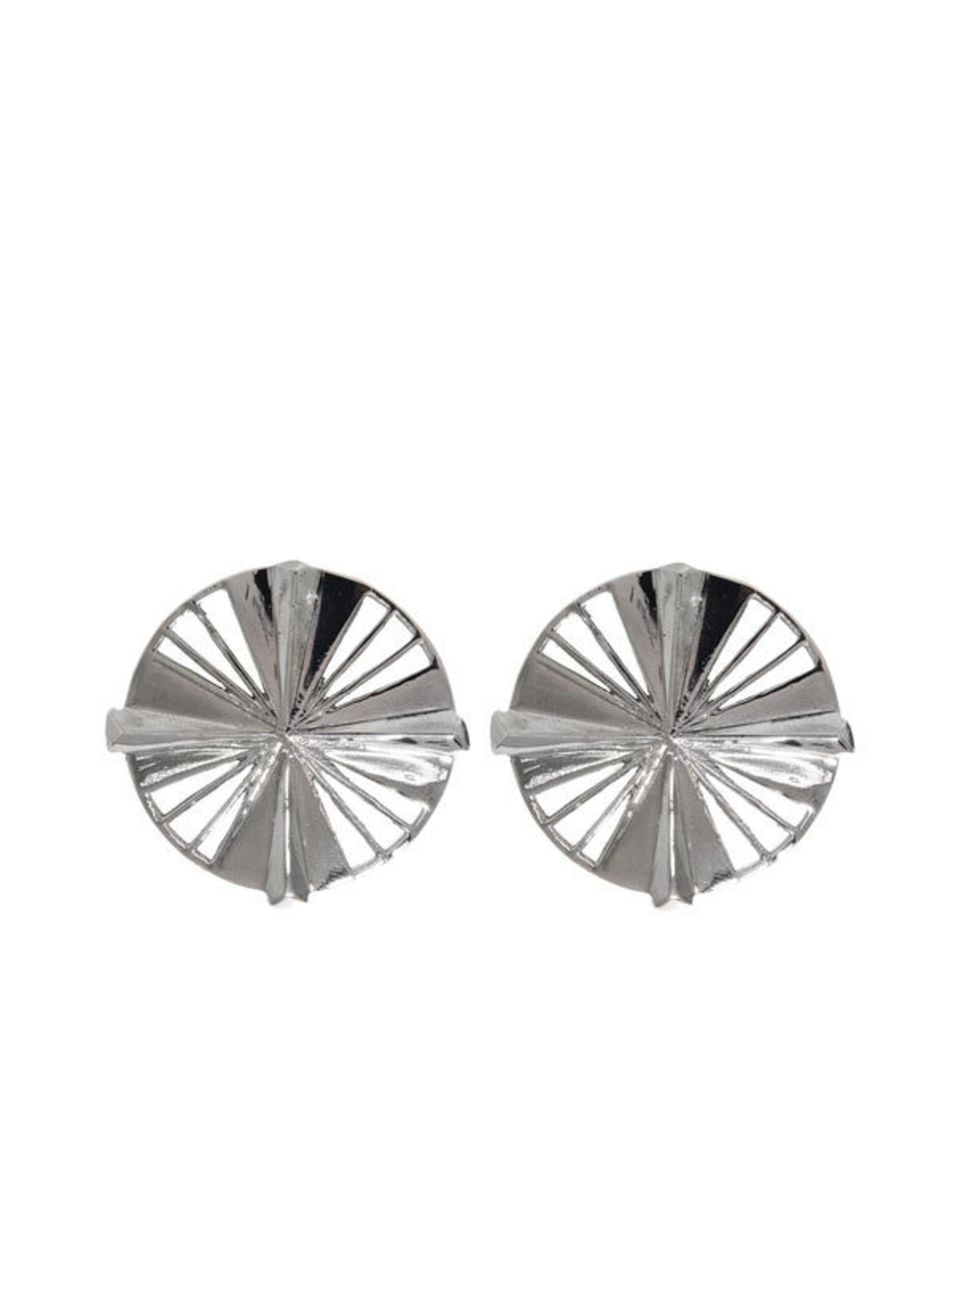 <p>Ongwat 'Umbrella' gunmetal earrings, £135, at <a href="http://www.kabiri.co.uk/designers/ongwat/umbrella-gunmetal-earrings.html">Kabiri</a></p>